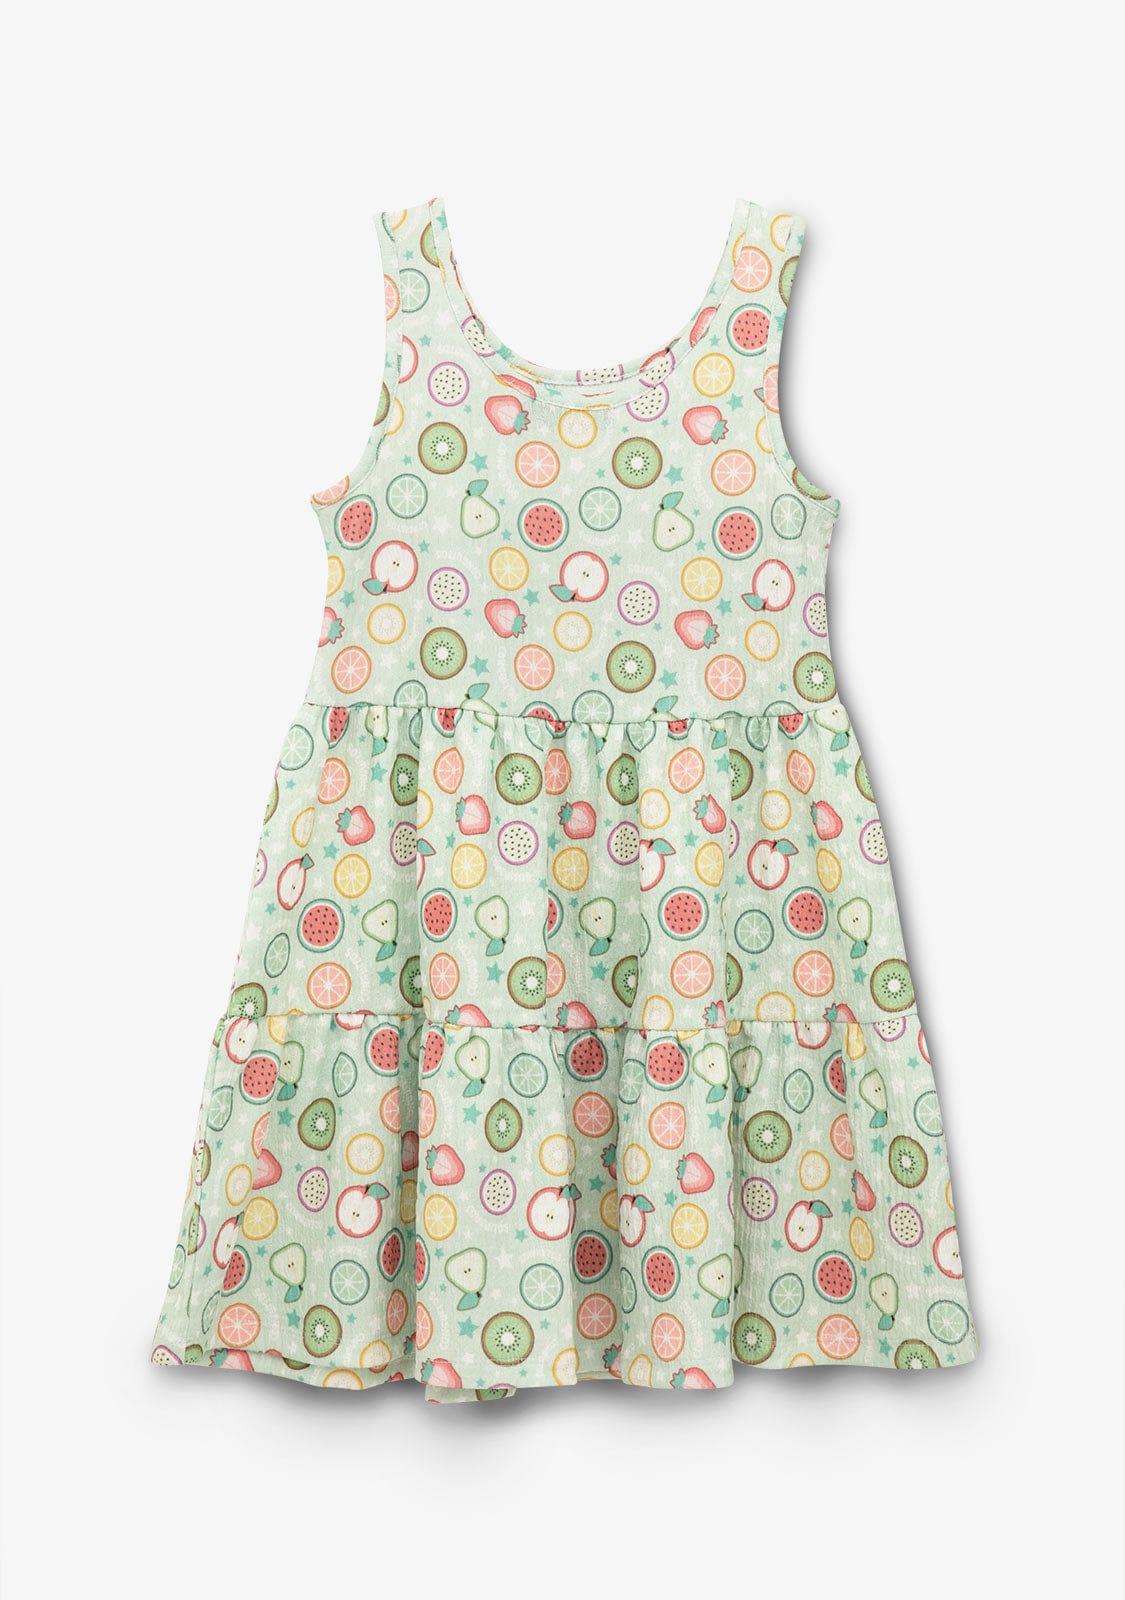 CONGUITOS TEXTIL Clothing Girl´s Fruit Print Mint Conguitos Dress